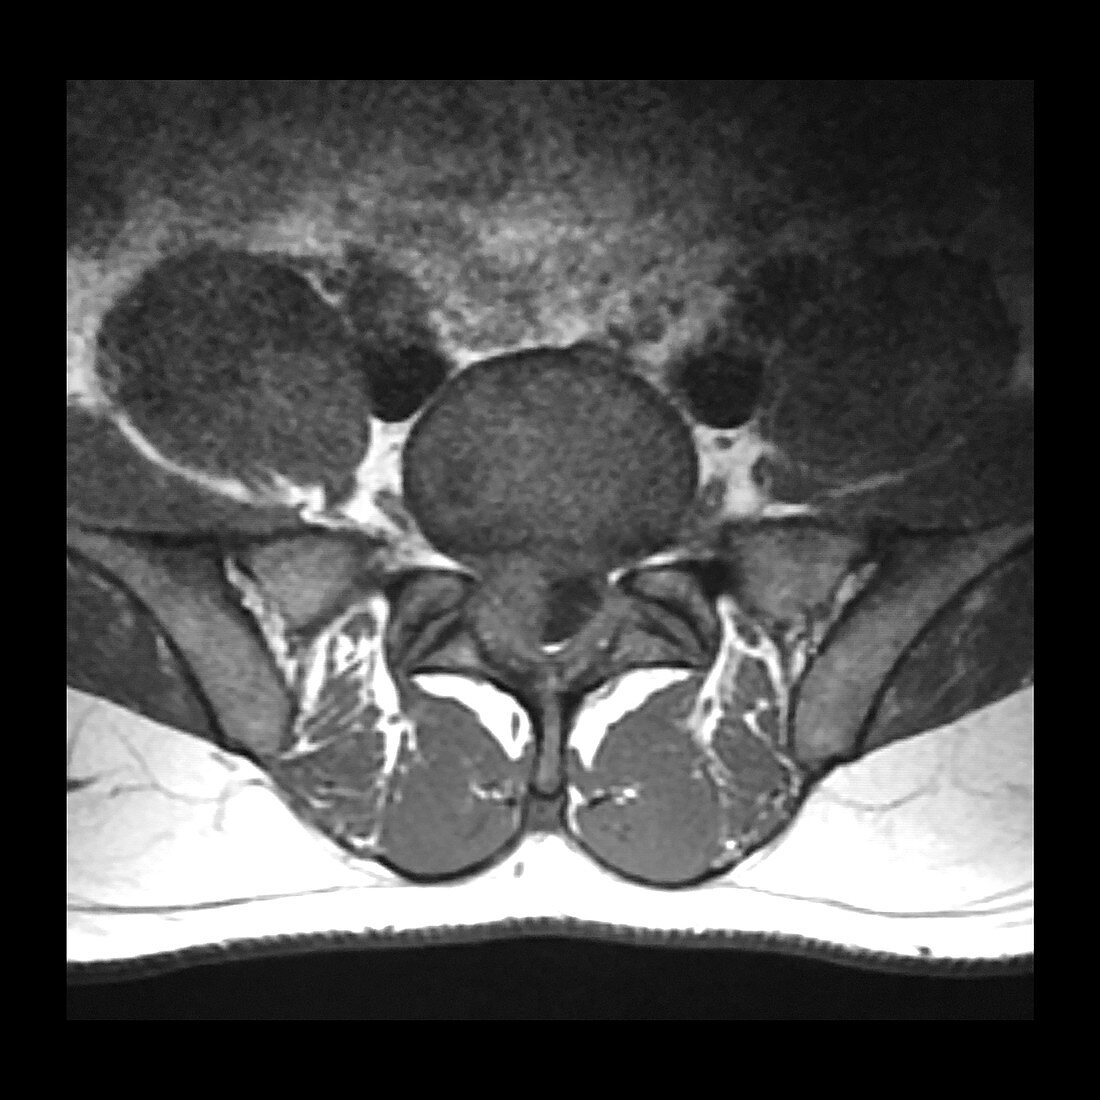 Large Lumbar Disc Herniation, MRI